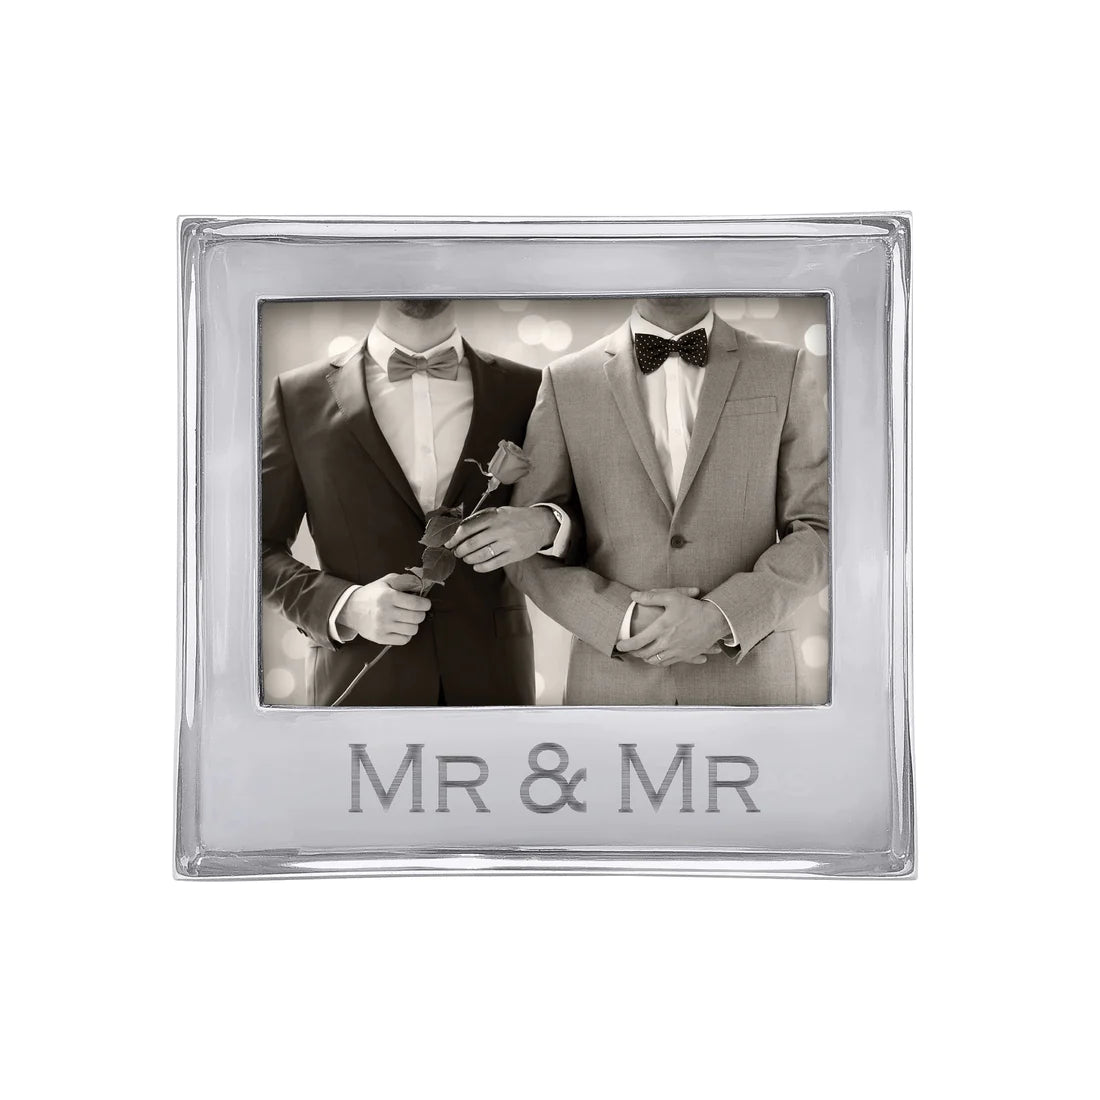 Mr & Mr Statement Frame - 5x7